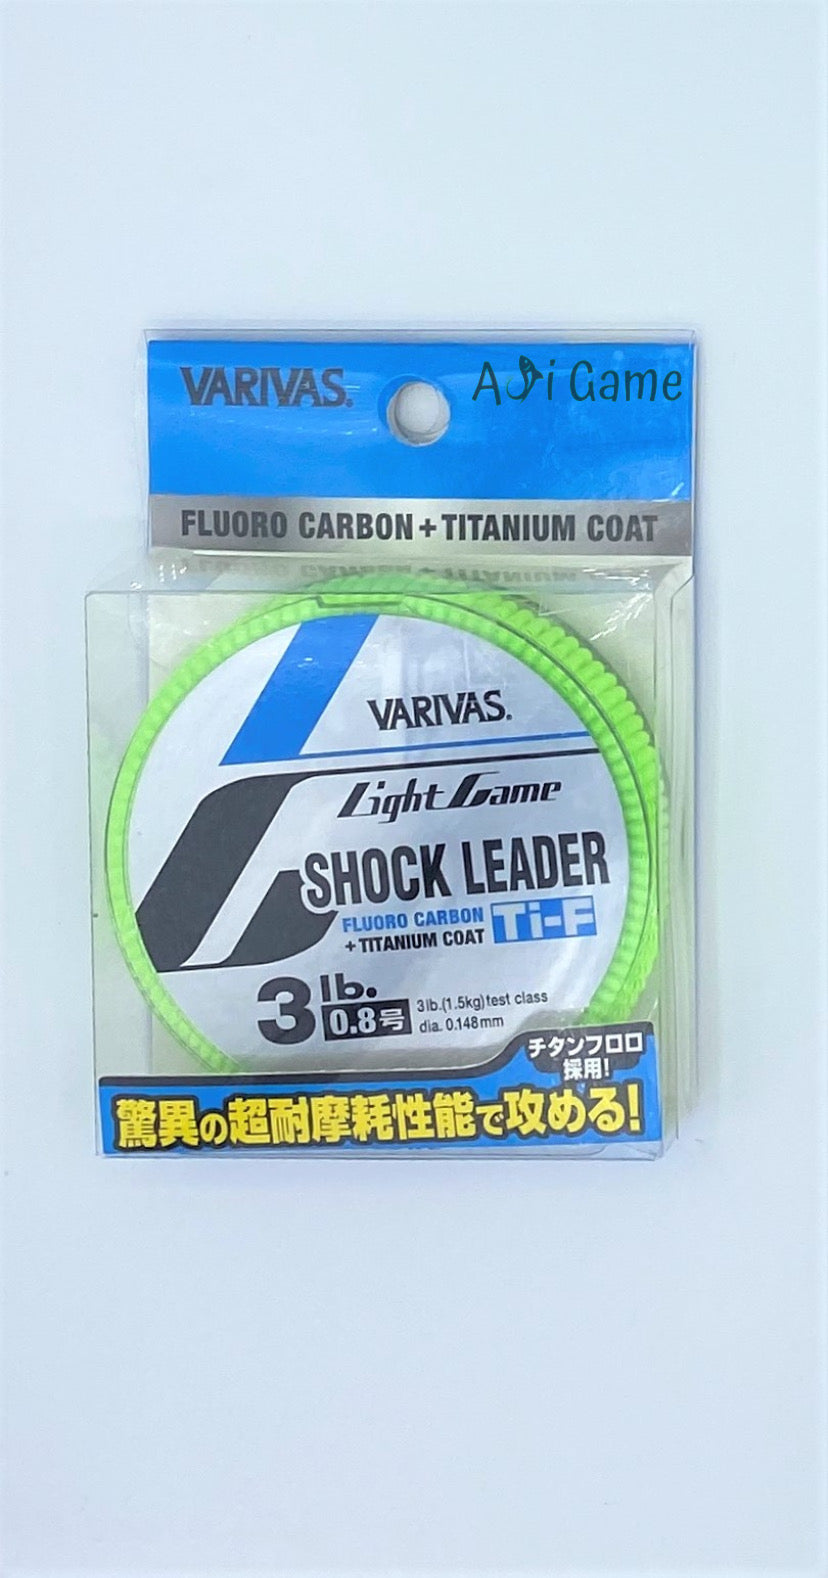 Varivas Light Game Shock Leader + Titanium Coat – Aji Game Fishing